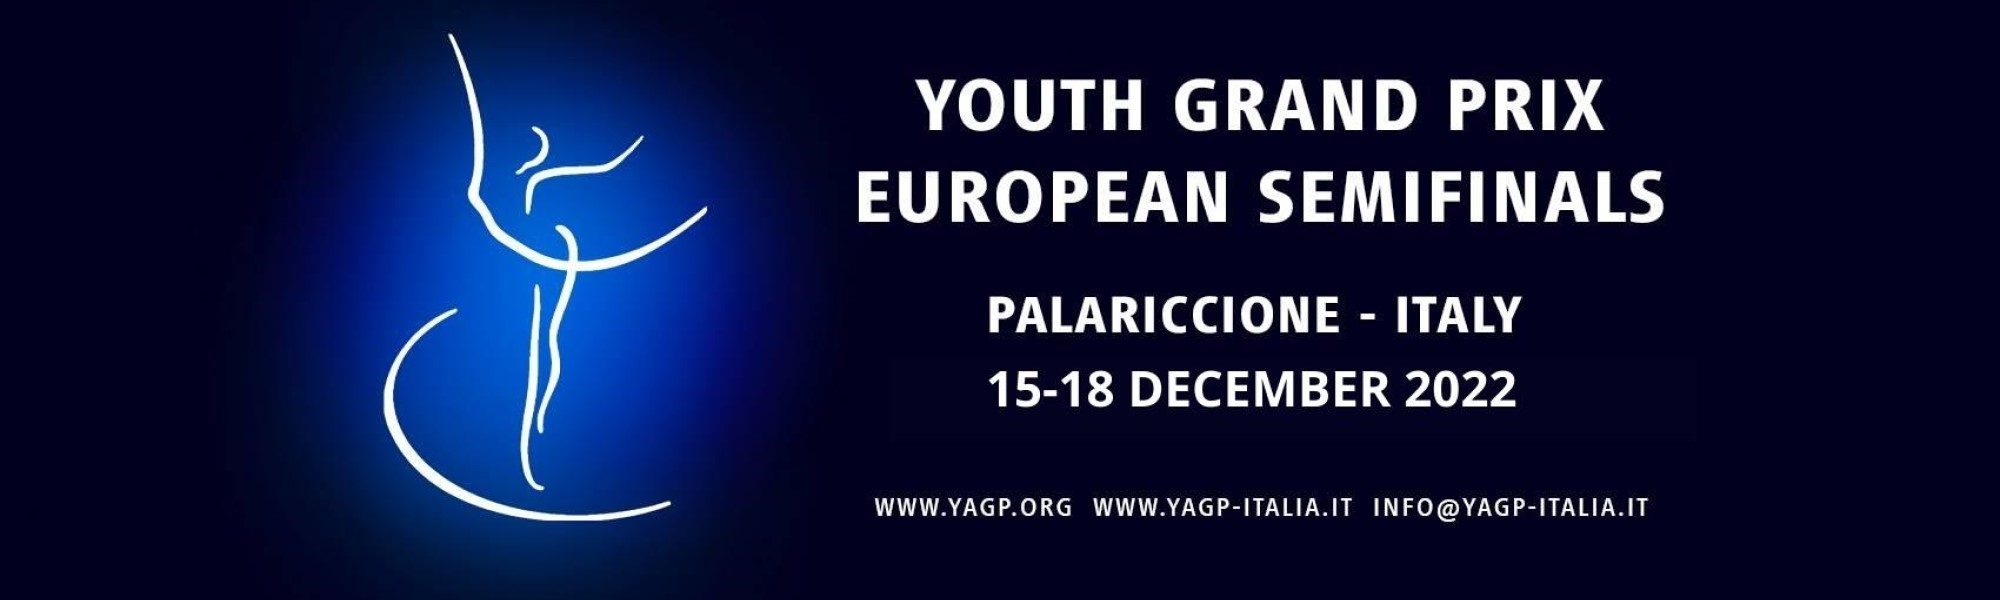 yagp; EU semifinali; youth grand prix